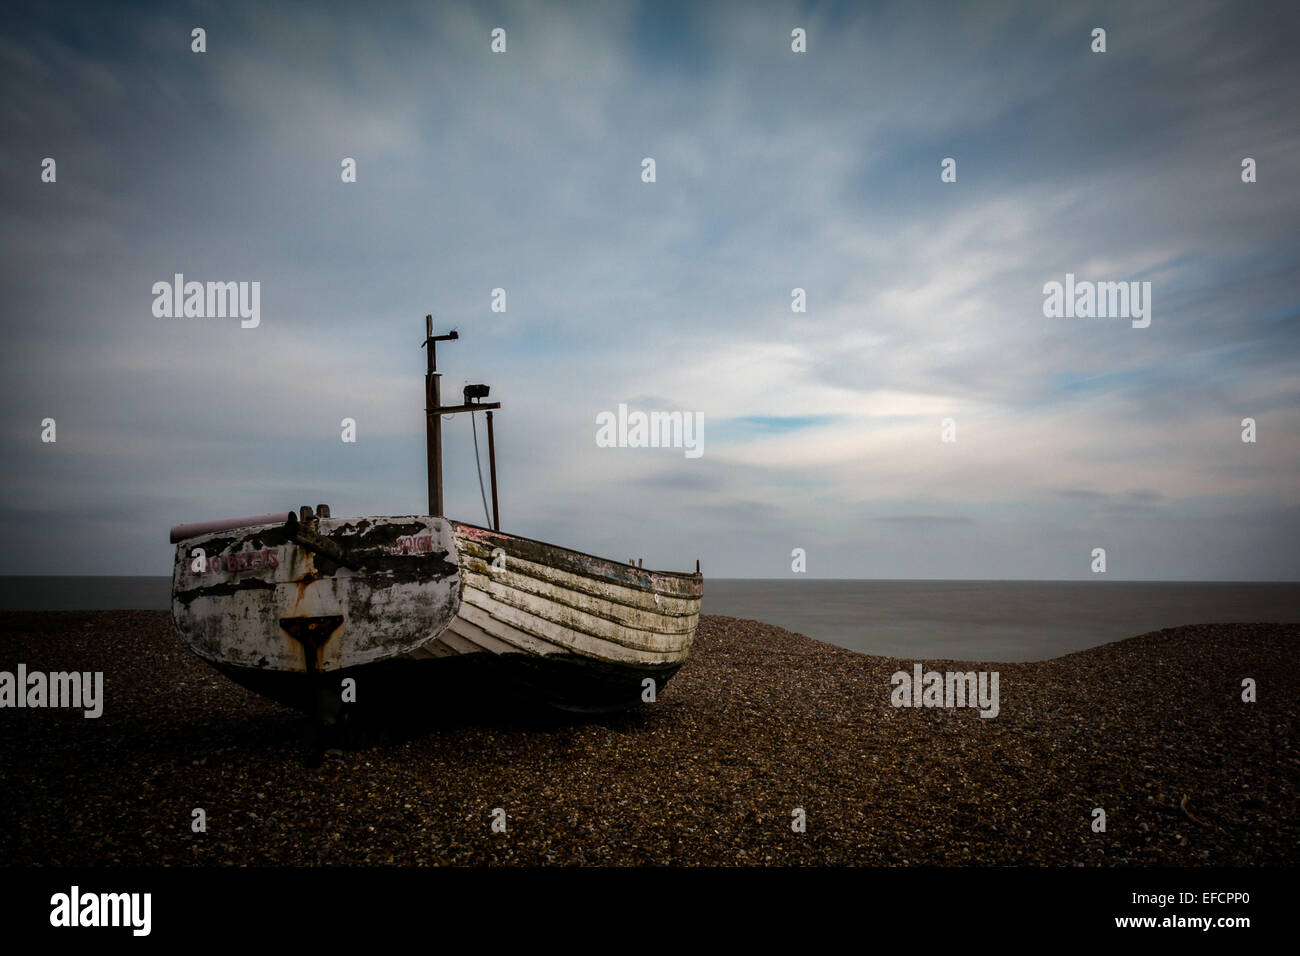 Boat on the beach, Aldeburgh, UK Stock Photo